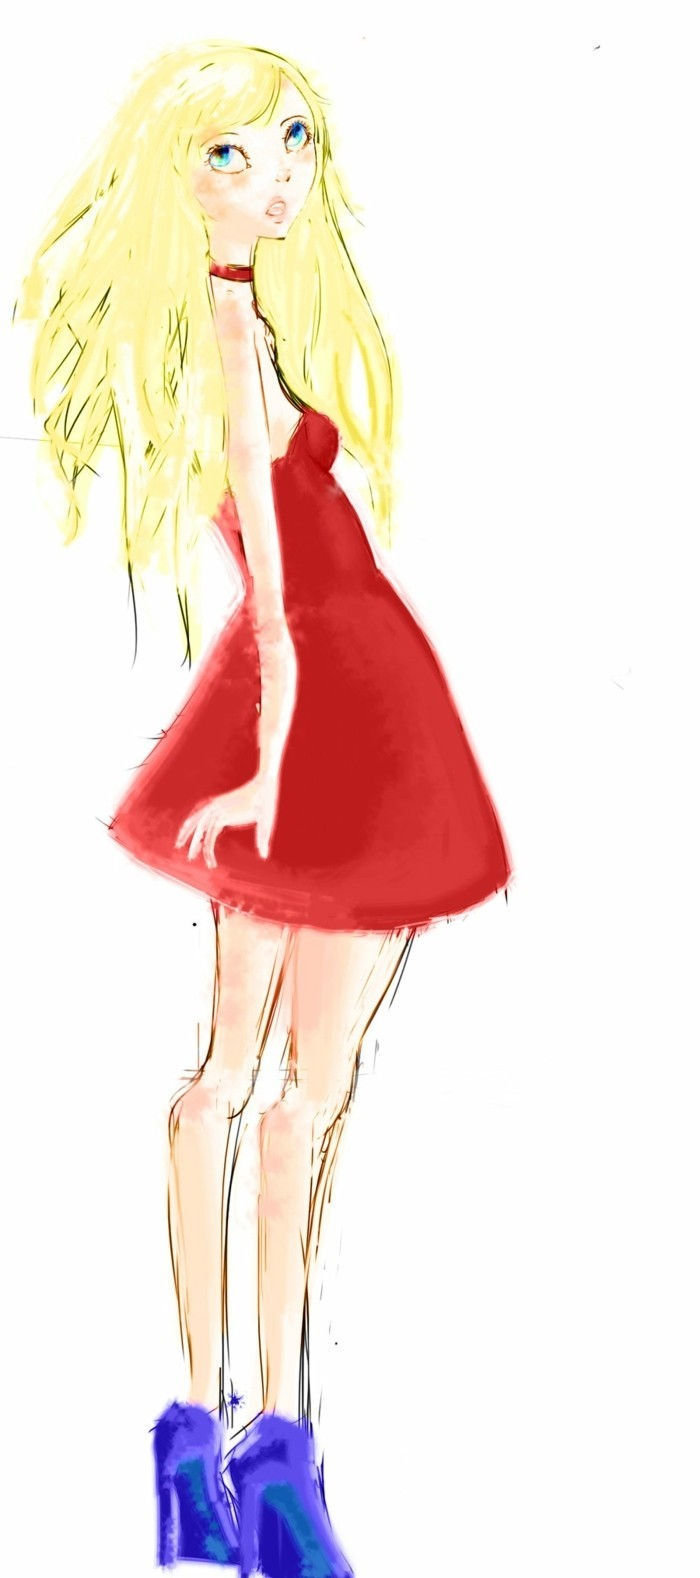 what-vojde-to-červeno-dress-paint-Model-design-červeno-modré kontrasty vytvoriť-blond-girl-shape